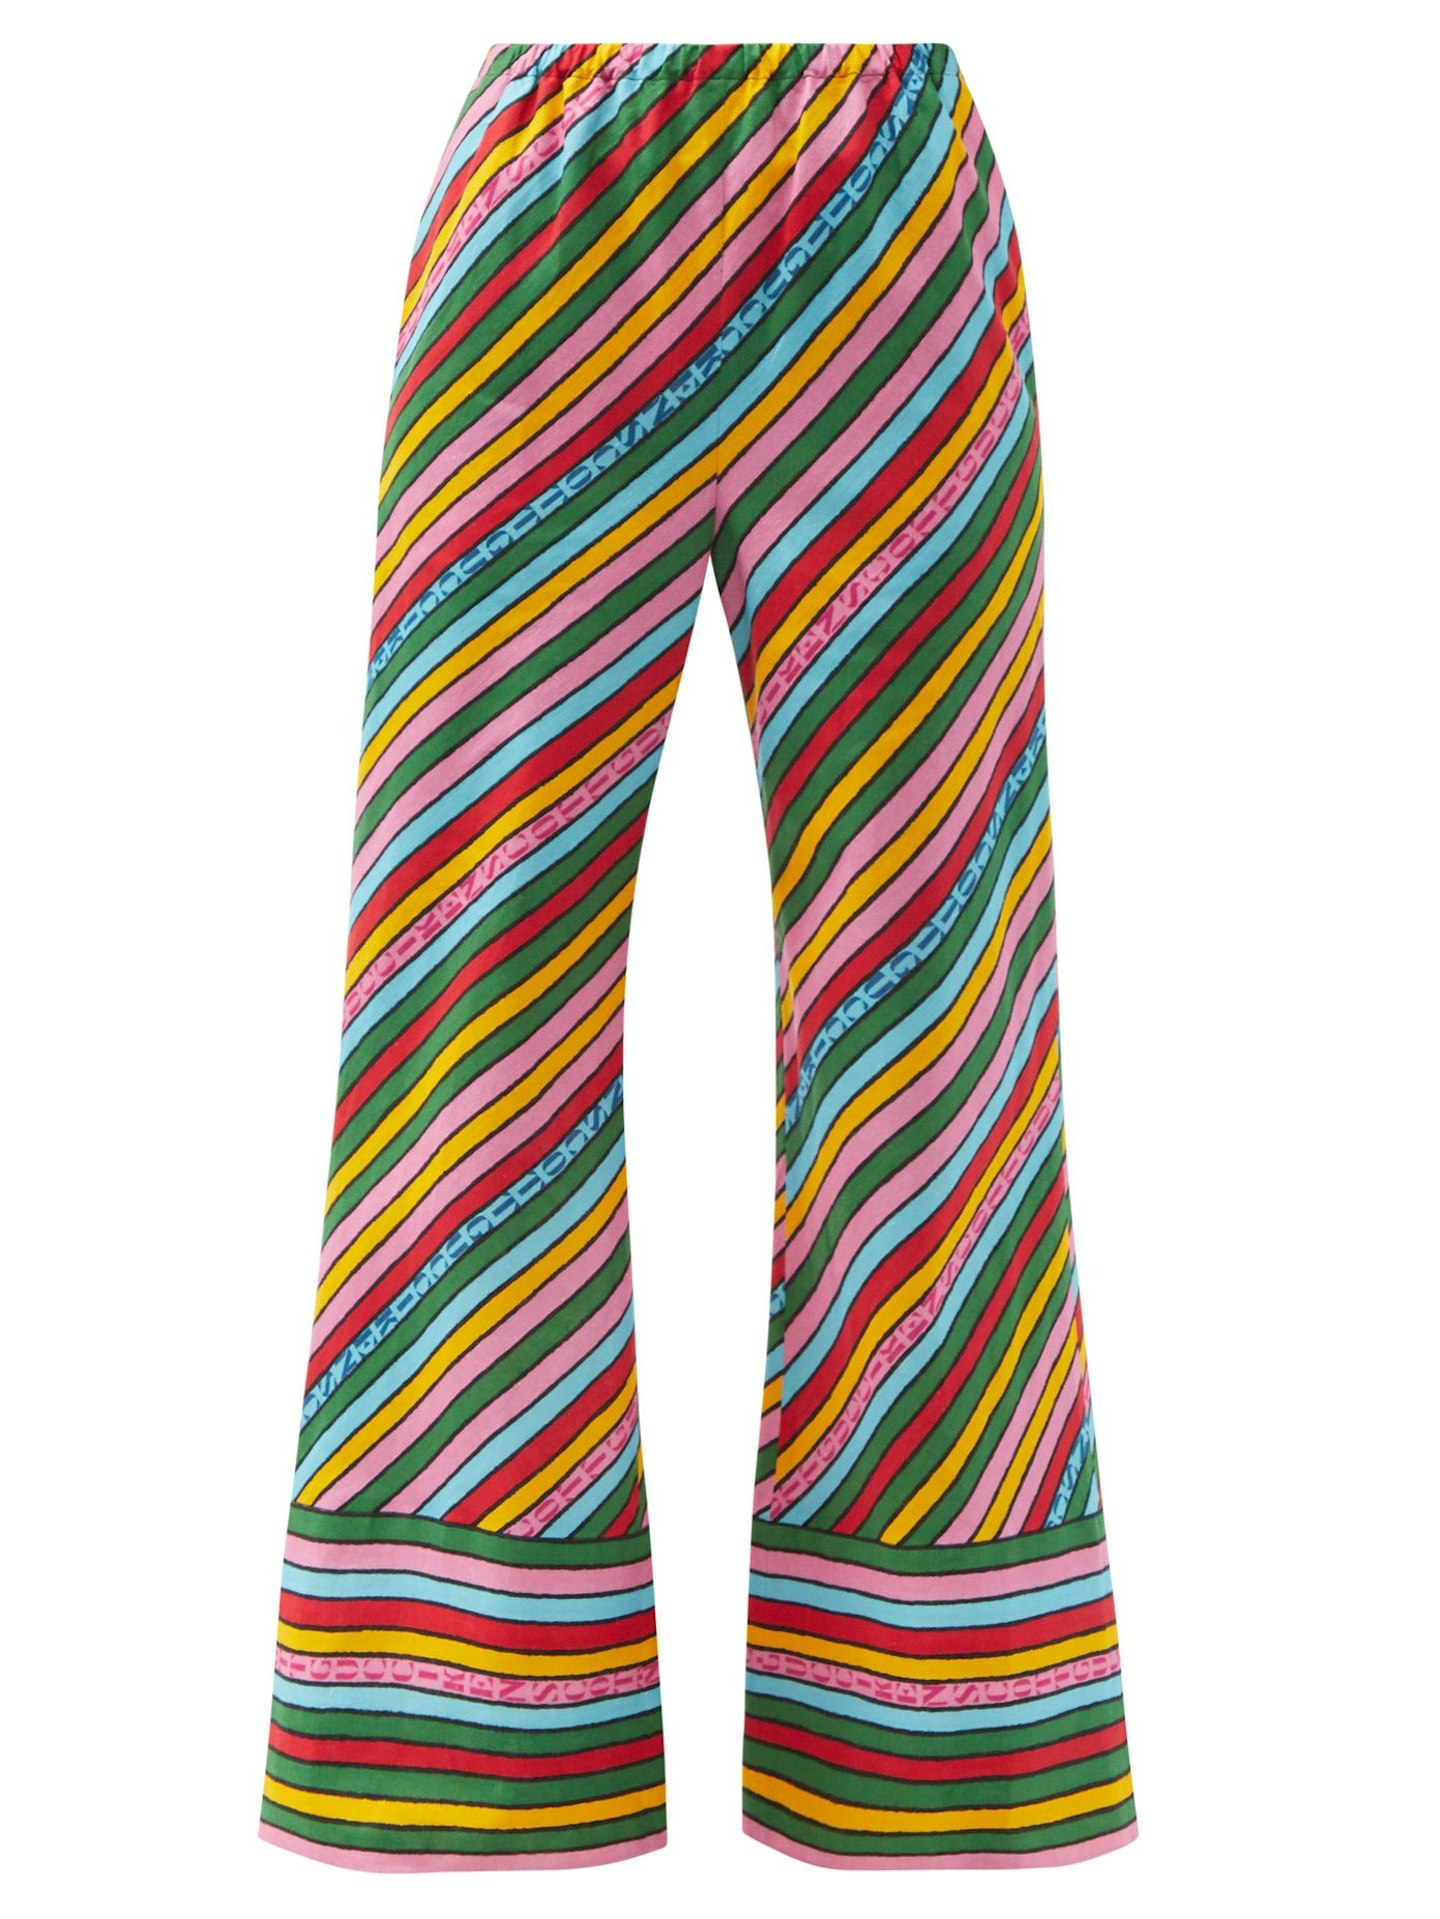 Gucci, Rainbow Print Linen Trousers, £870